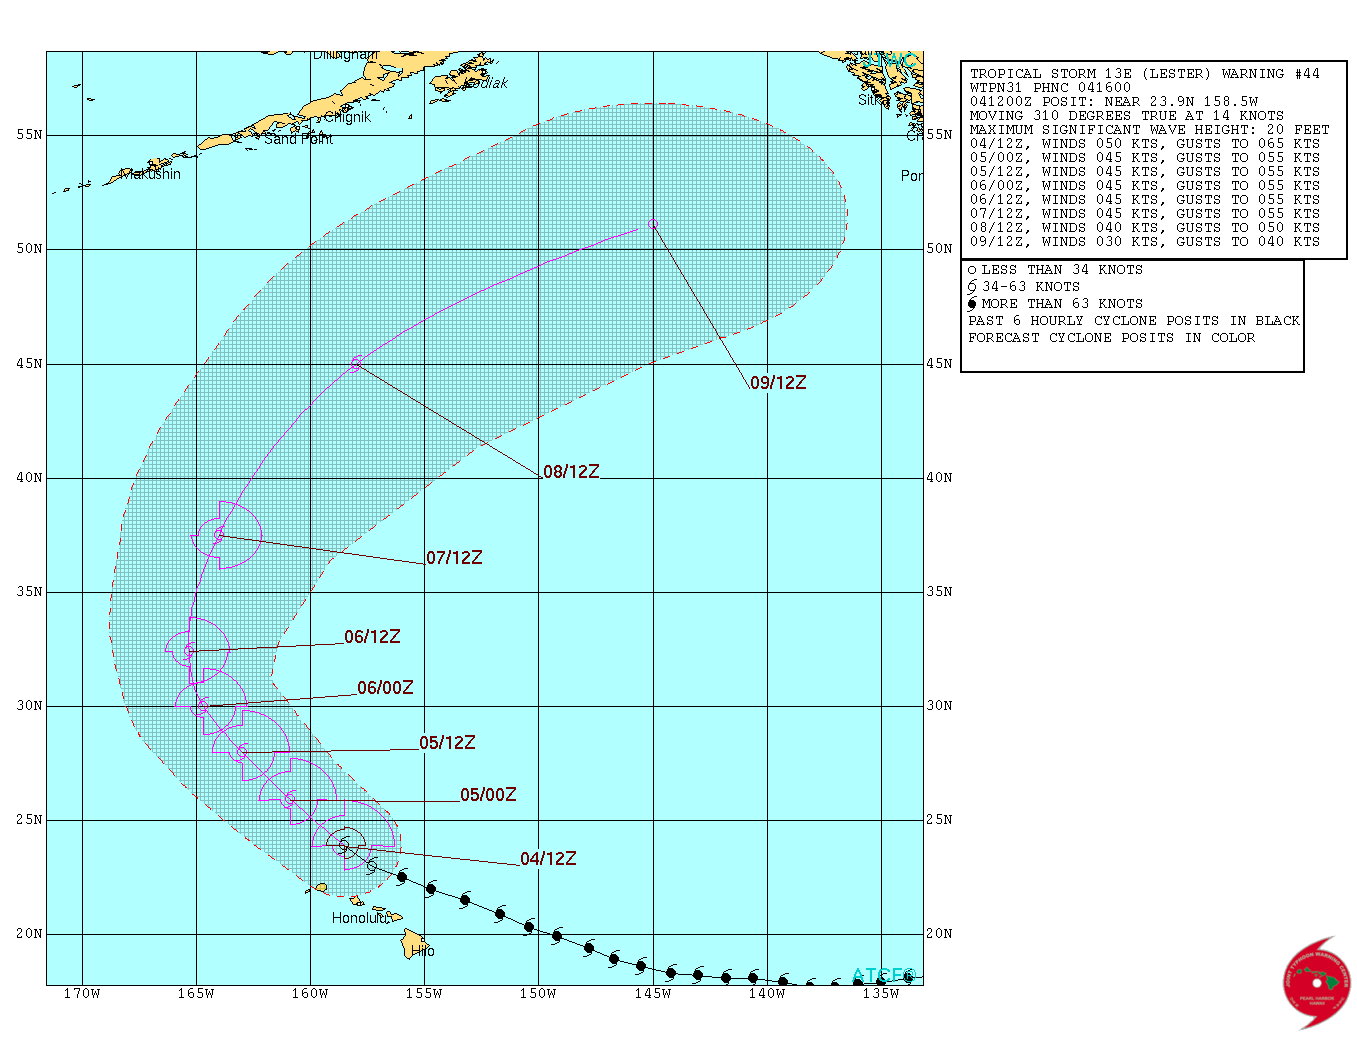 JTWC TS 13 2016 Forecast 44